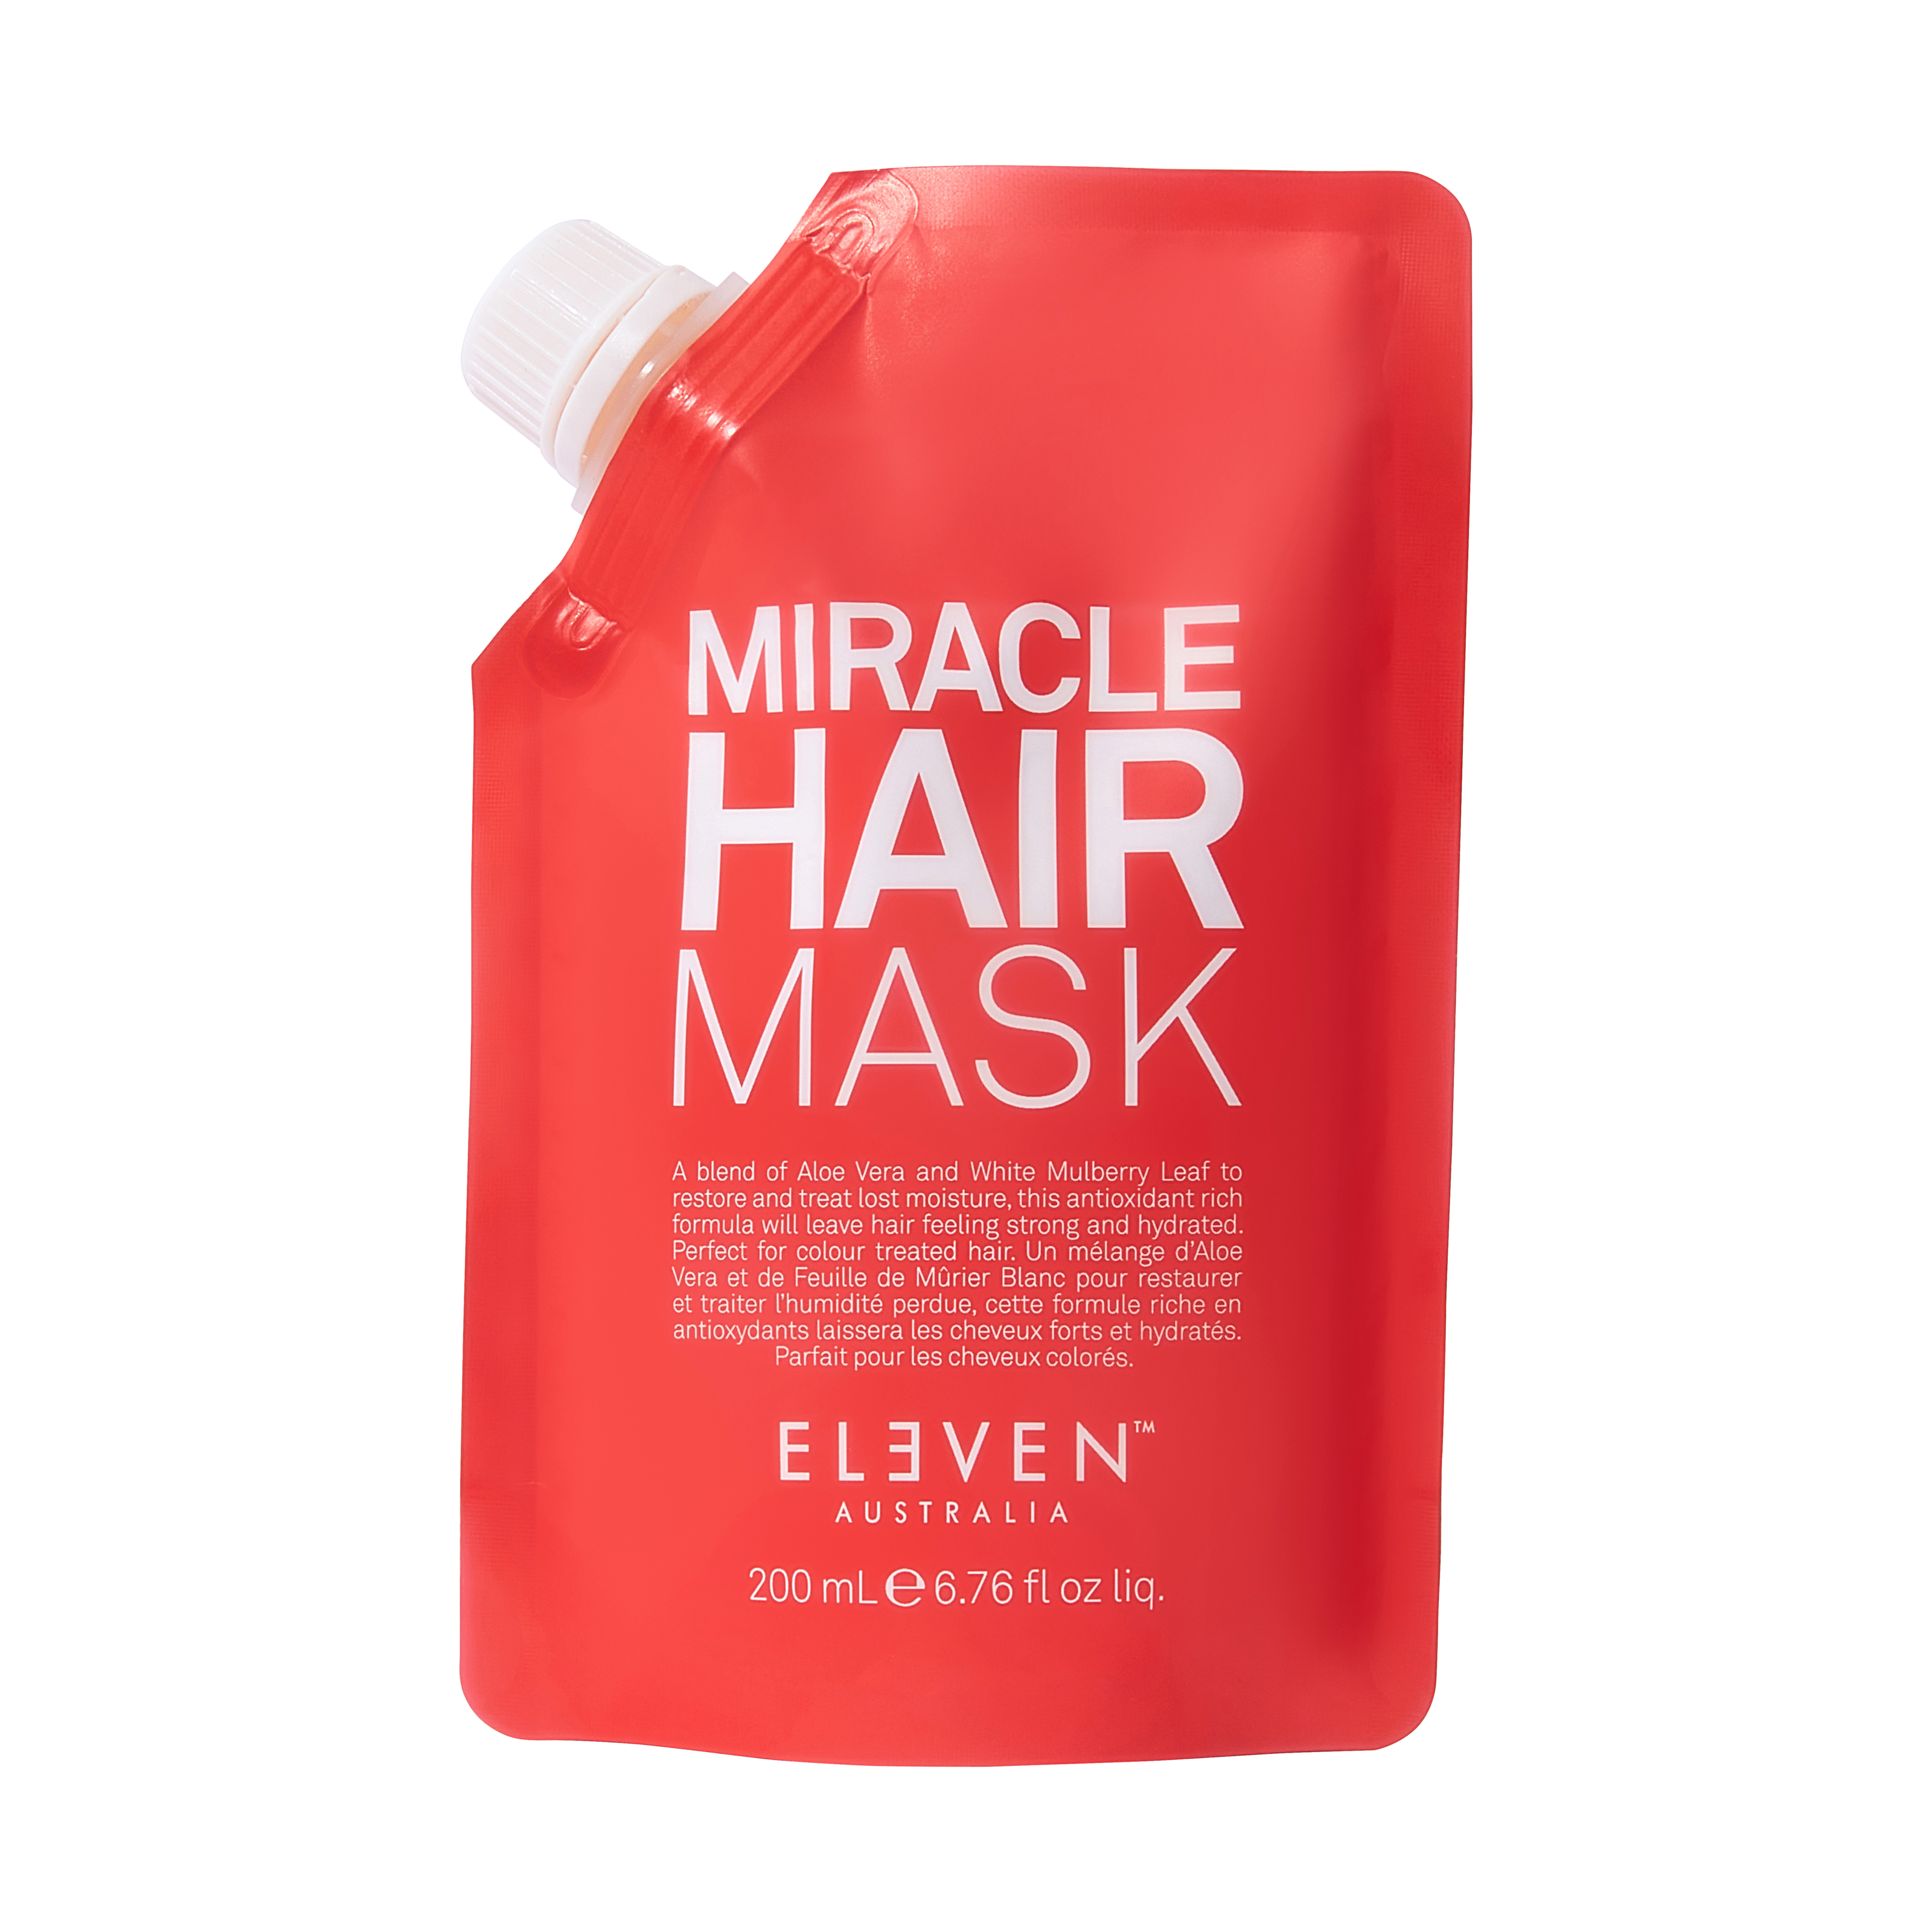 Eleven Australia Miracle Hair Mask 200 ml